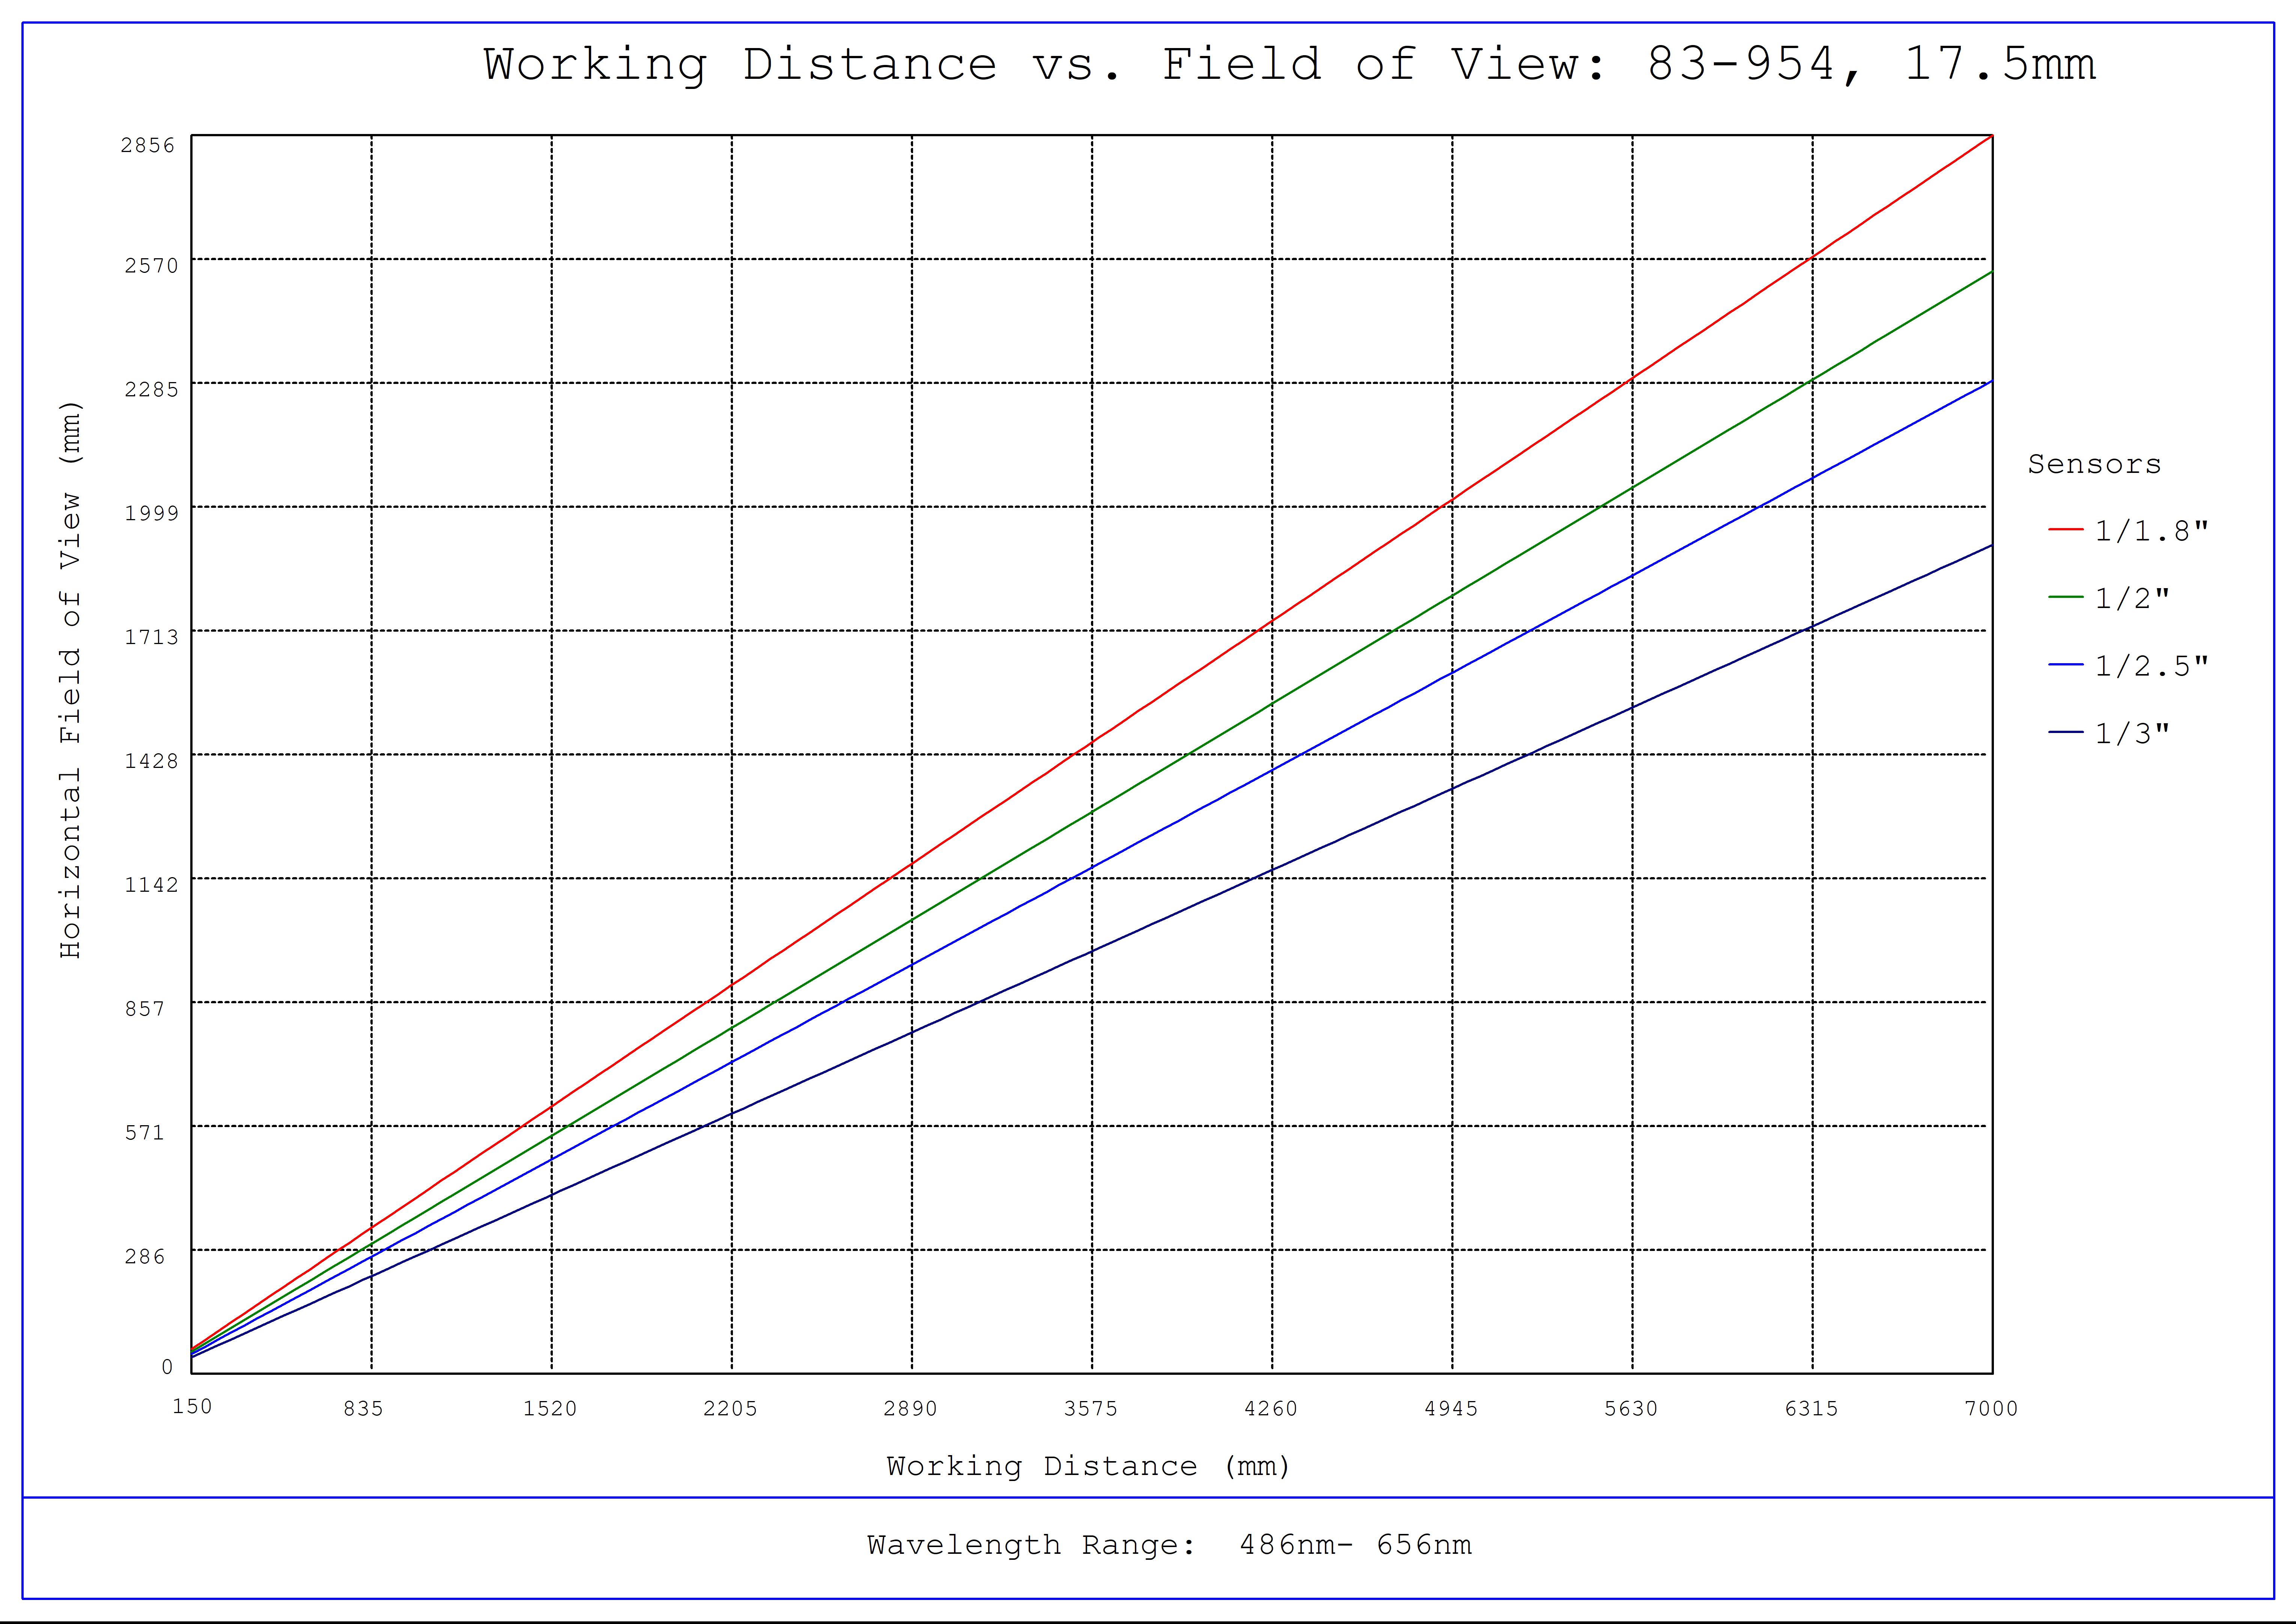 #83-954, 17.5mm FL f/8, Blue Series M12 Lens, Working Distance versus Field of View Plot